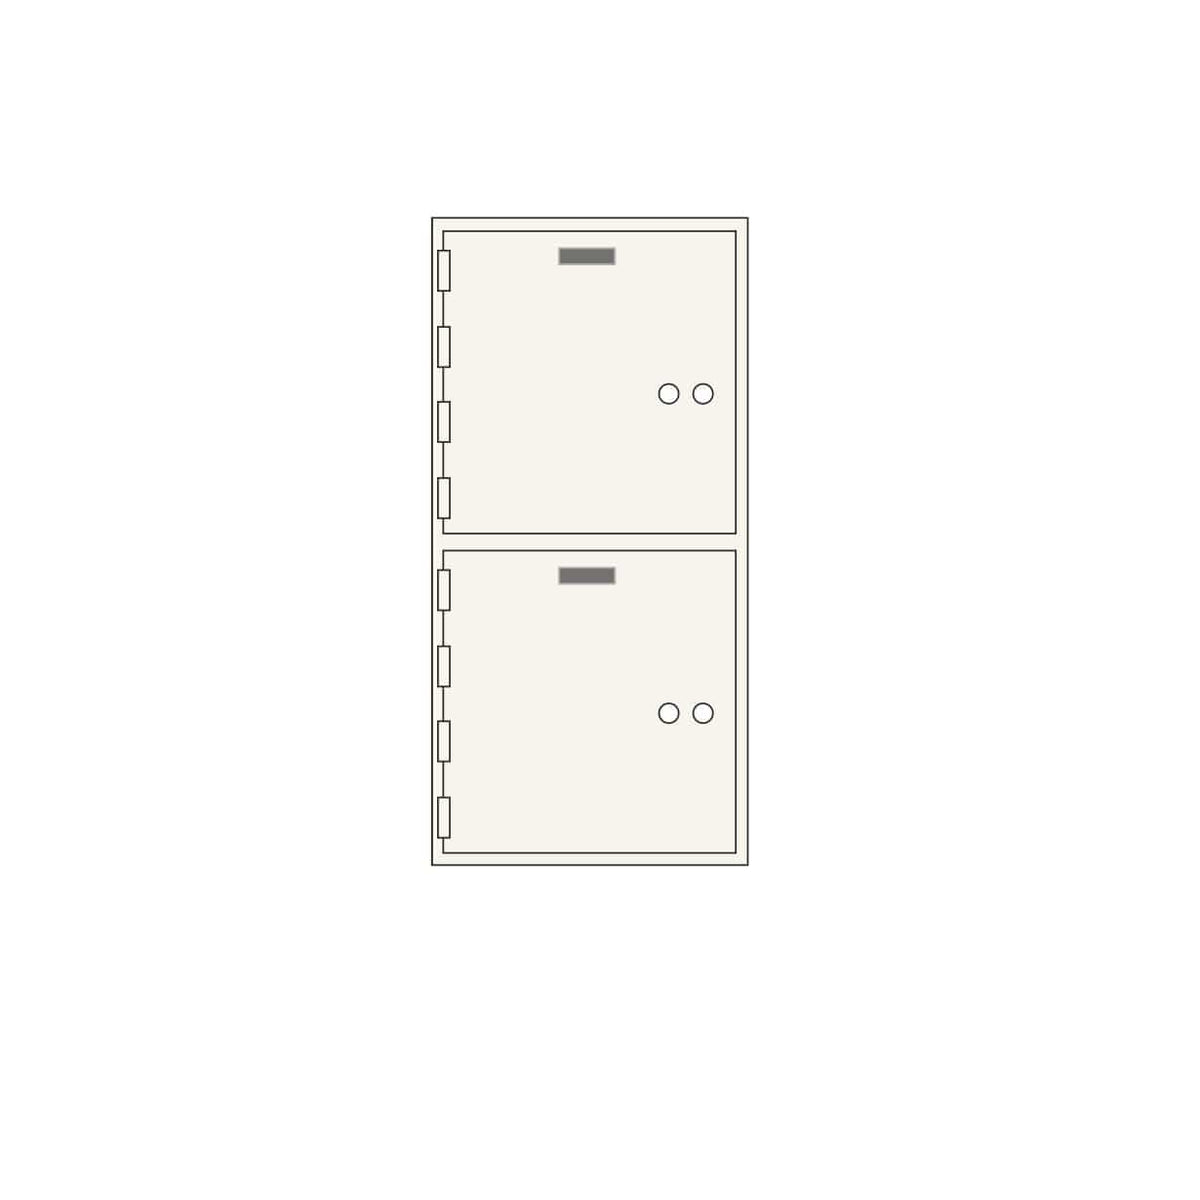 SoCal Bridgeman AXN-2 Modular Depository Safe | 2 x [10&quot;x10&quot;] Deposit Boxes